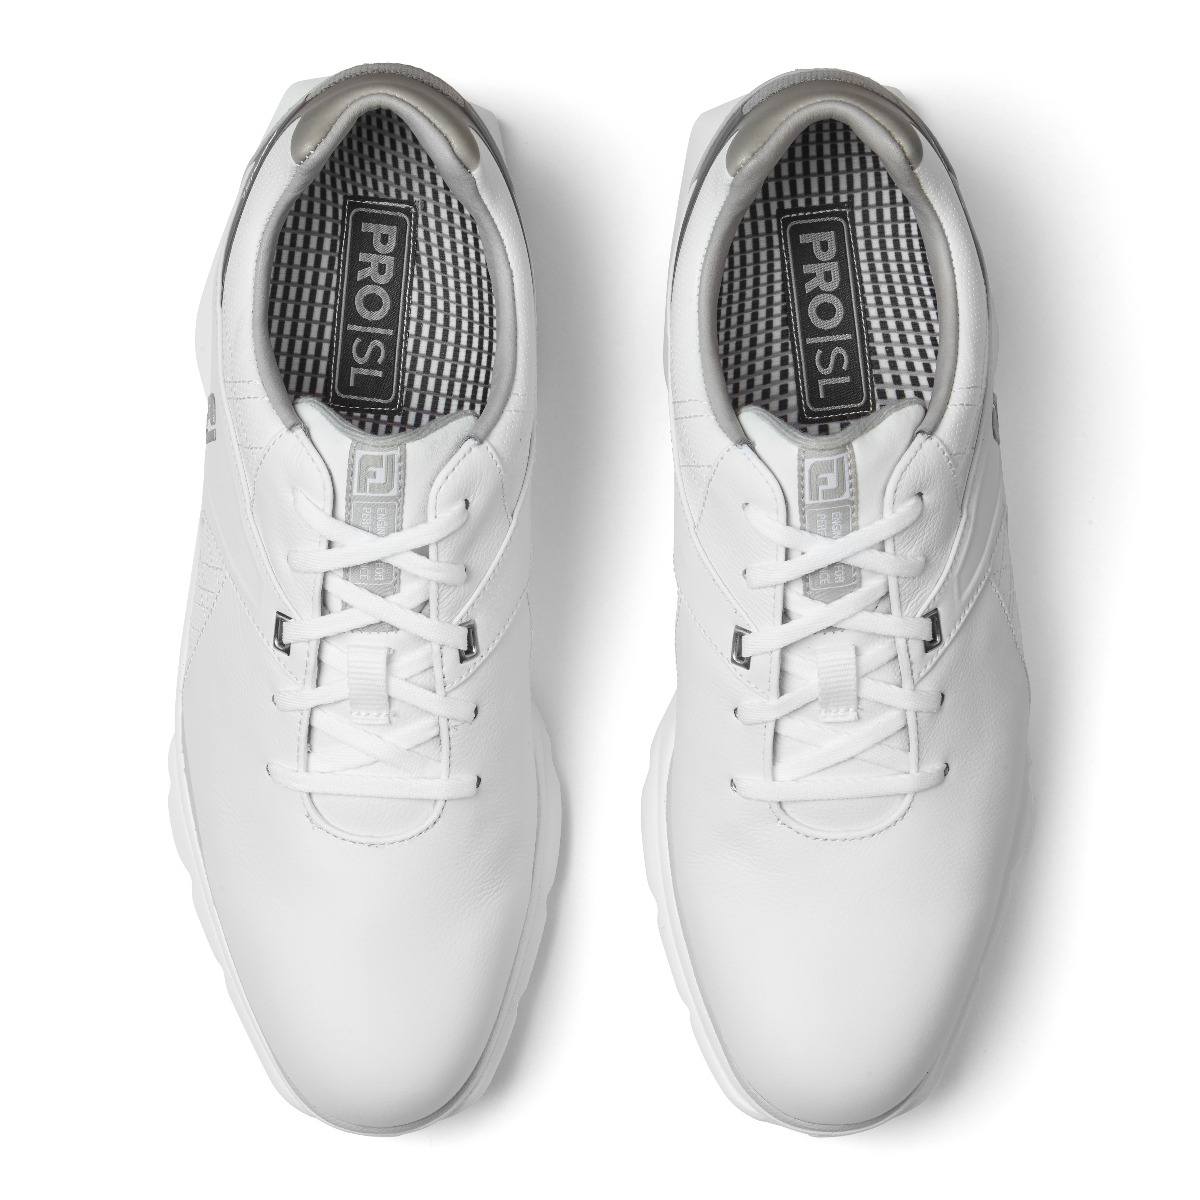 FootJoy Pro SL Golf Shoes 53804